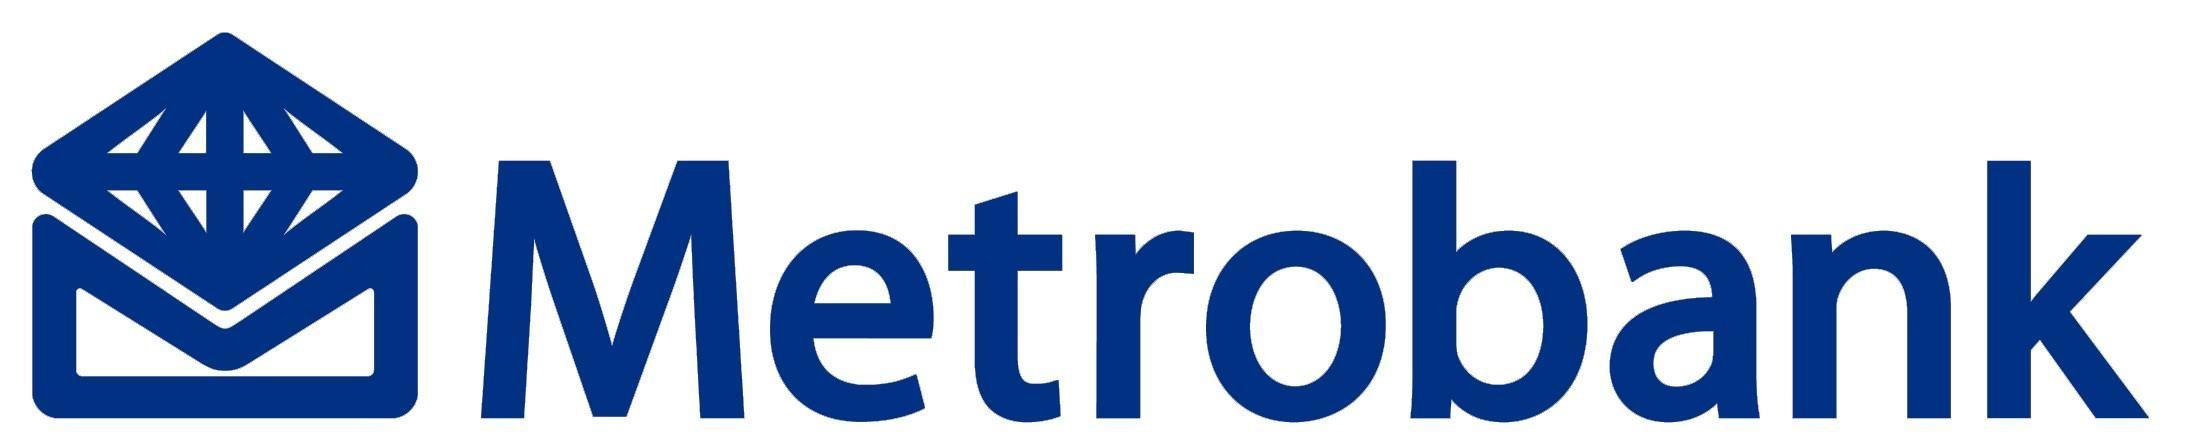 Metrobank Logo - Image - Metrobank logo.jpg | Logopedia | FANDOM powered by Wikia